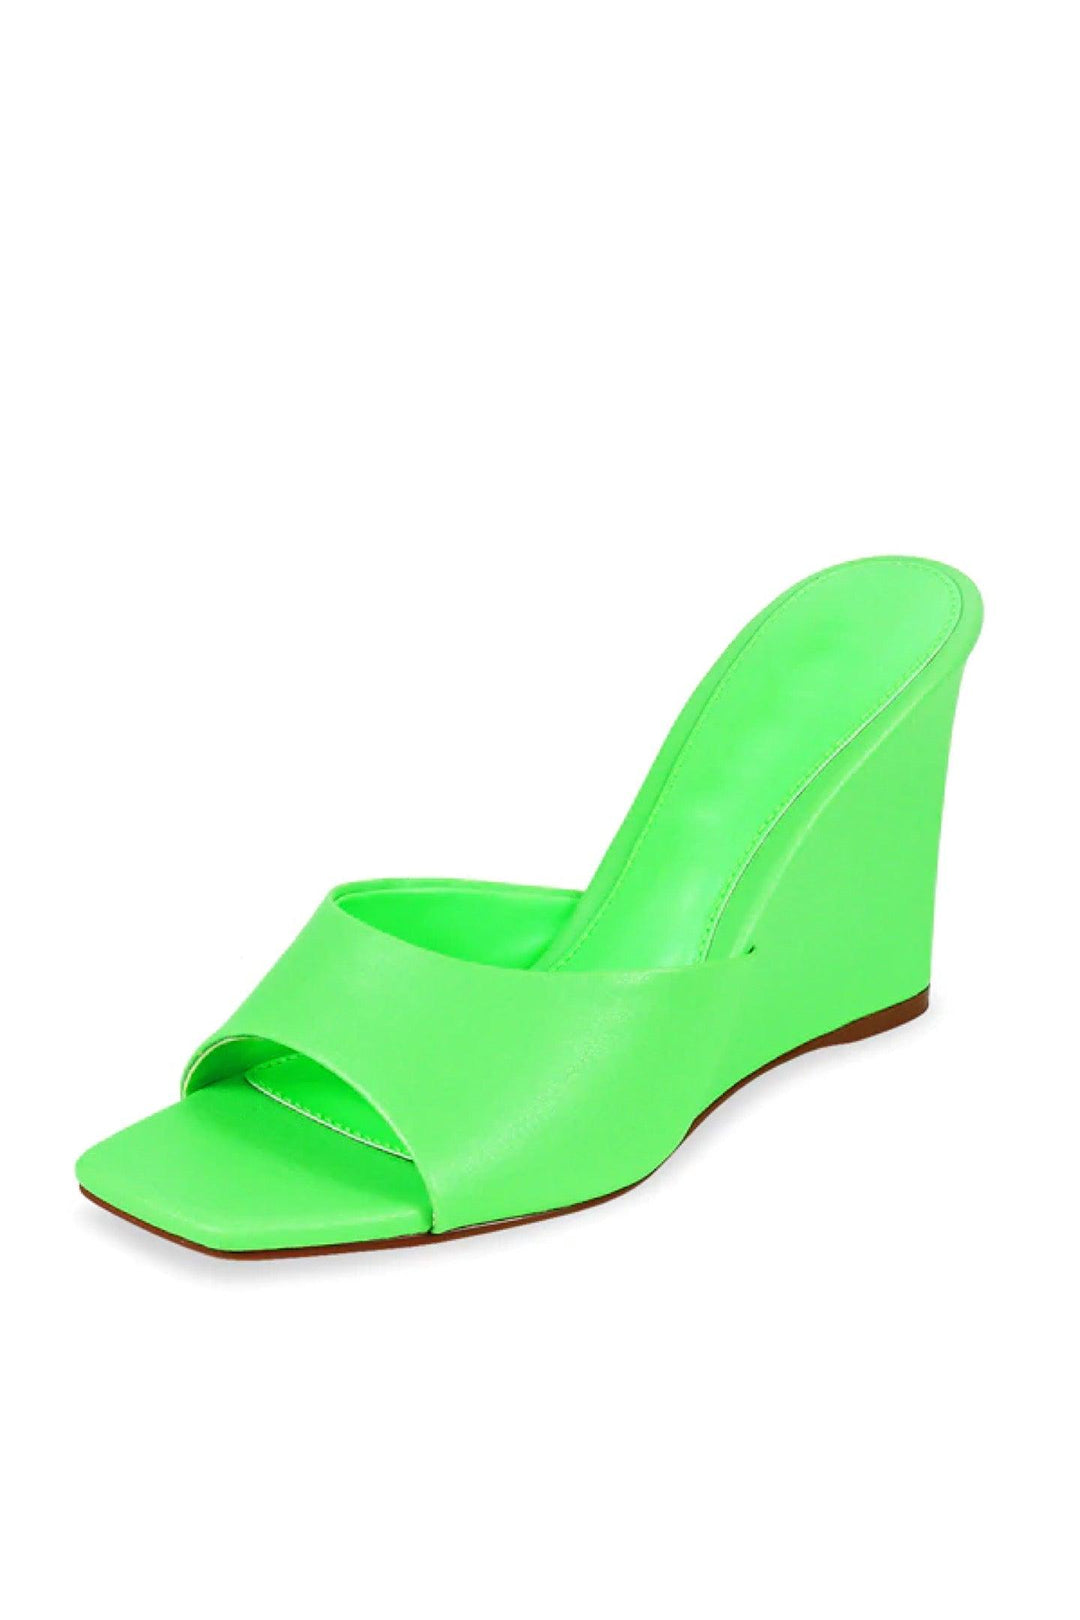 Neon Green Wedge Sandal - Size 8 - 7Kouture